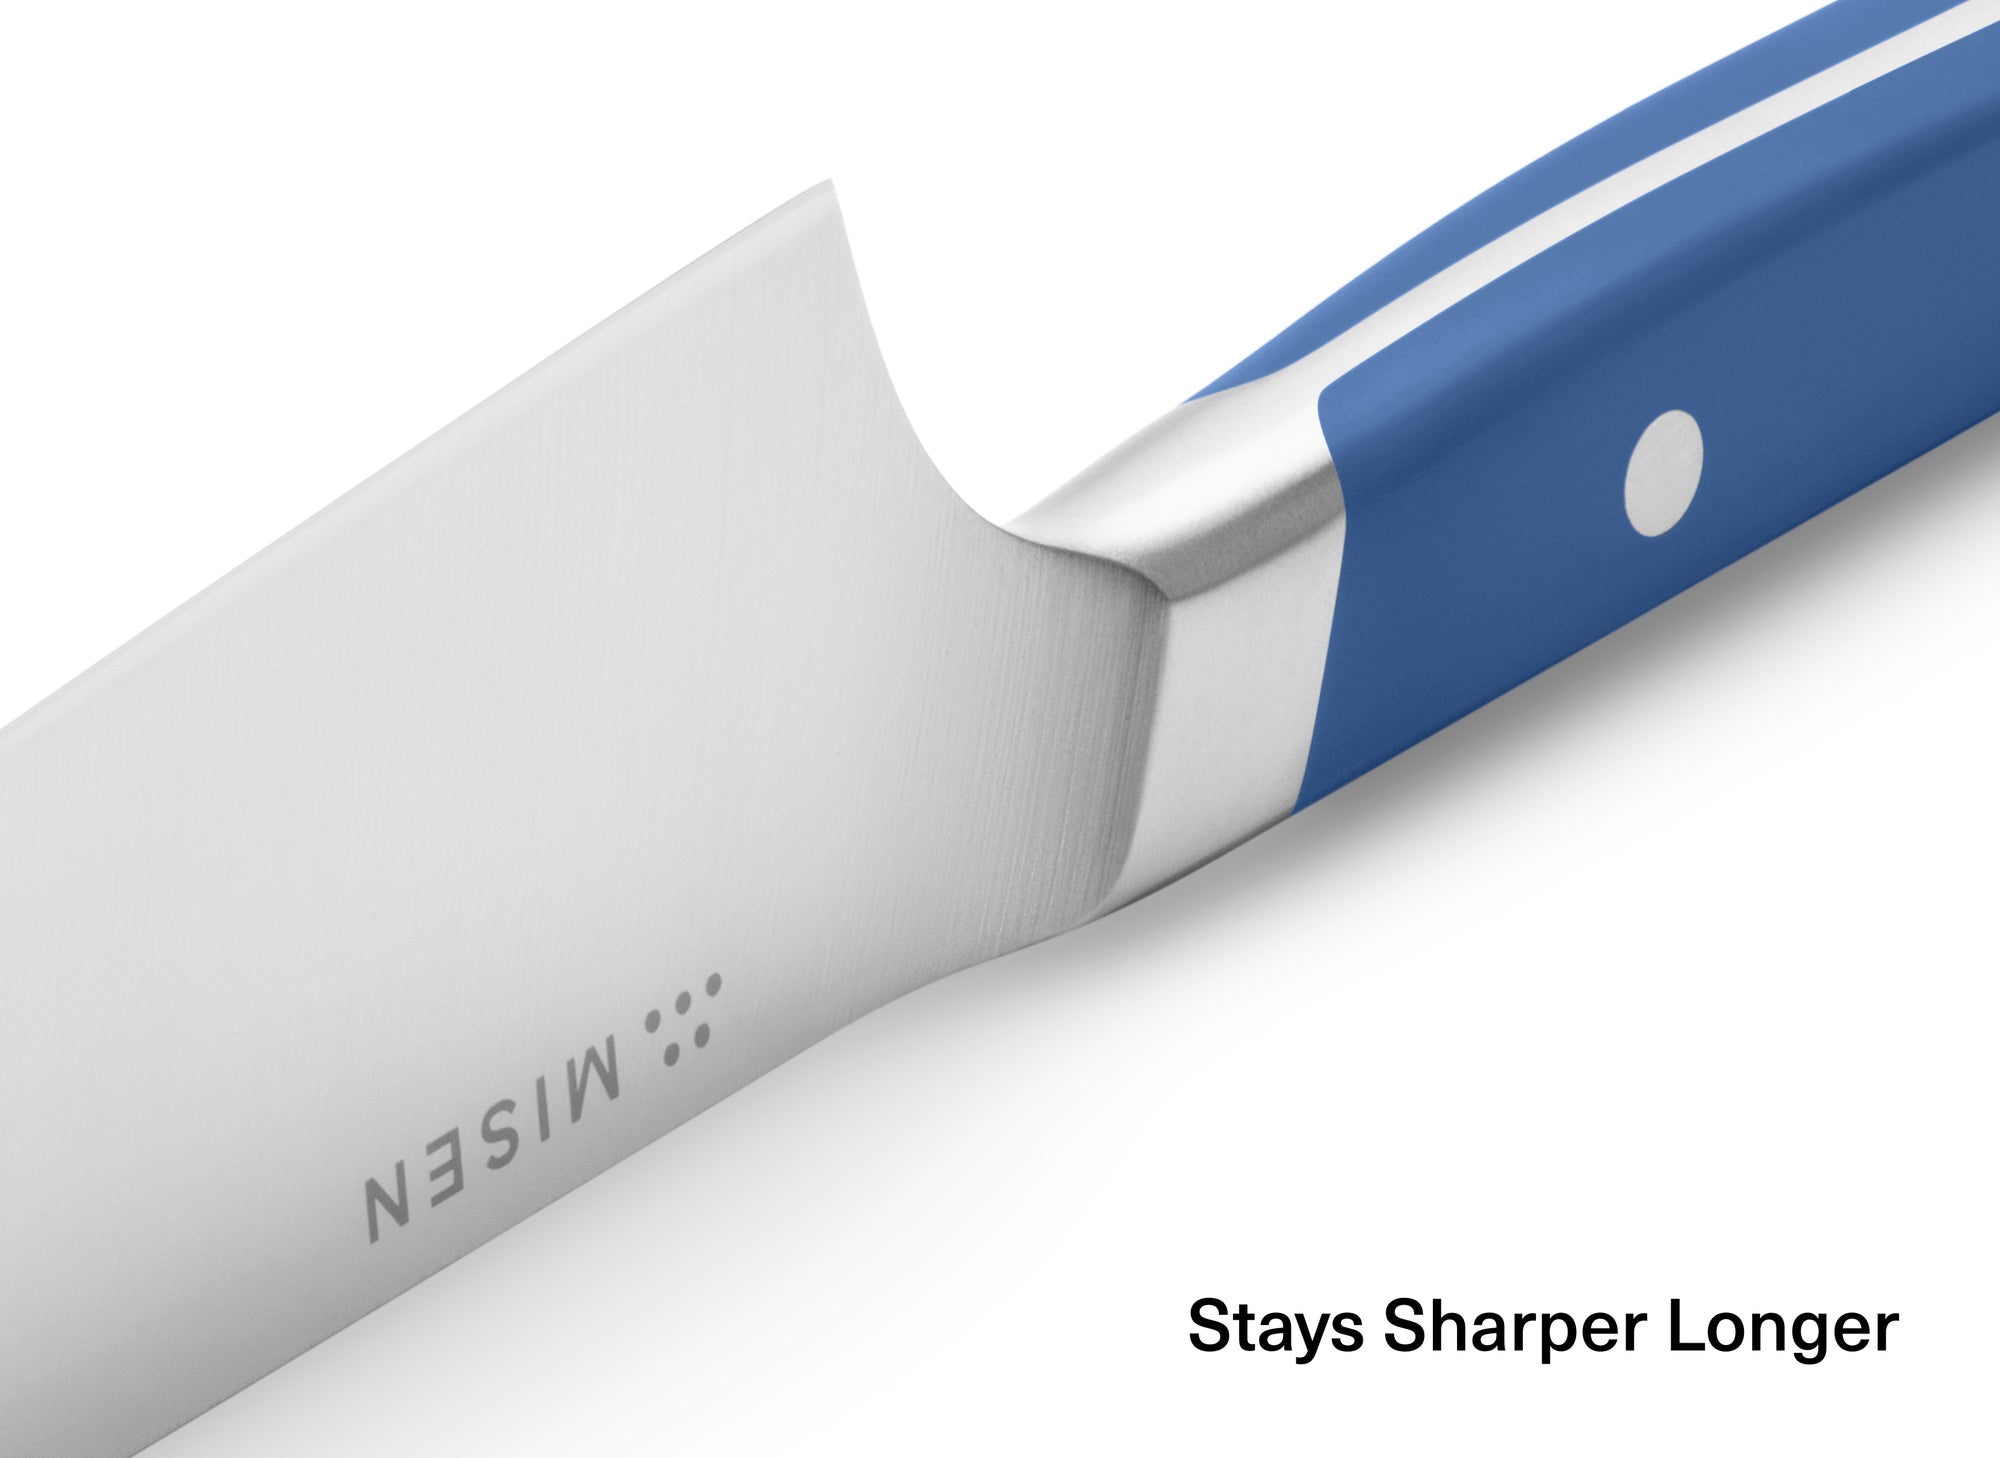 The Misen Chef's Knife stays sharper longer than traditional knives.